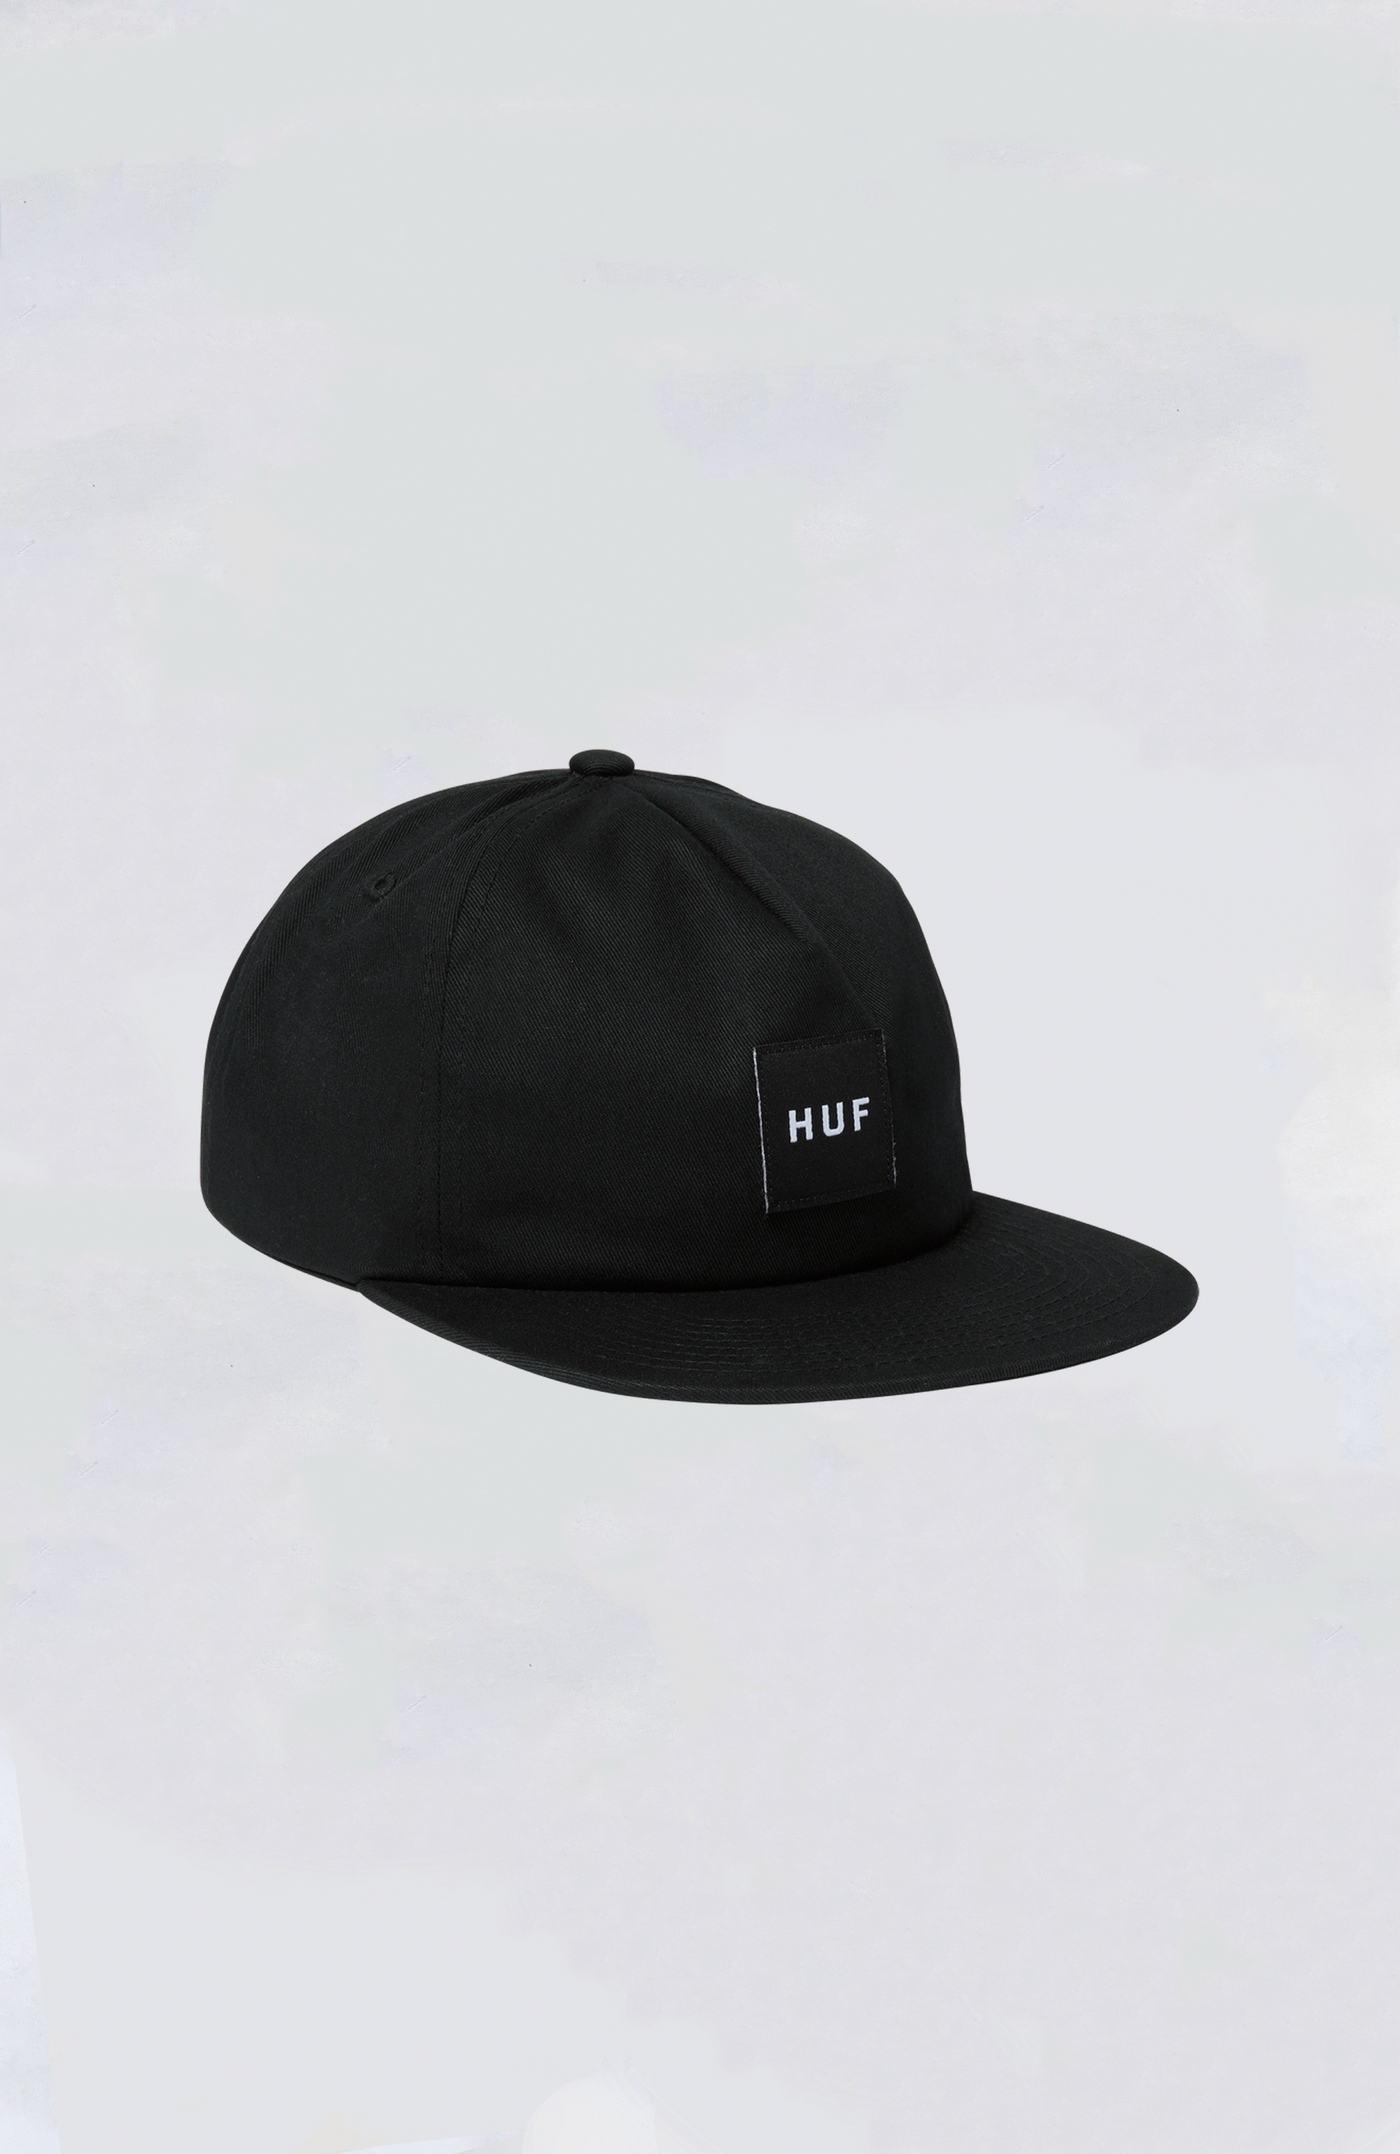 HUF - HUF Set Box Snapback Hat